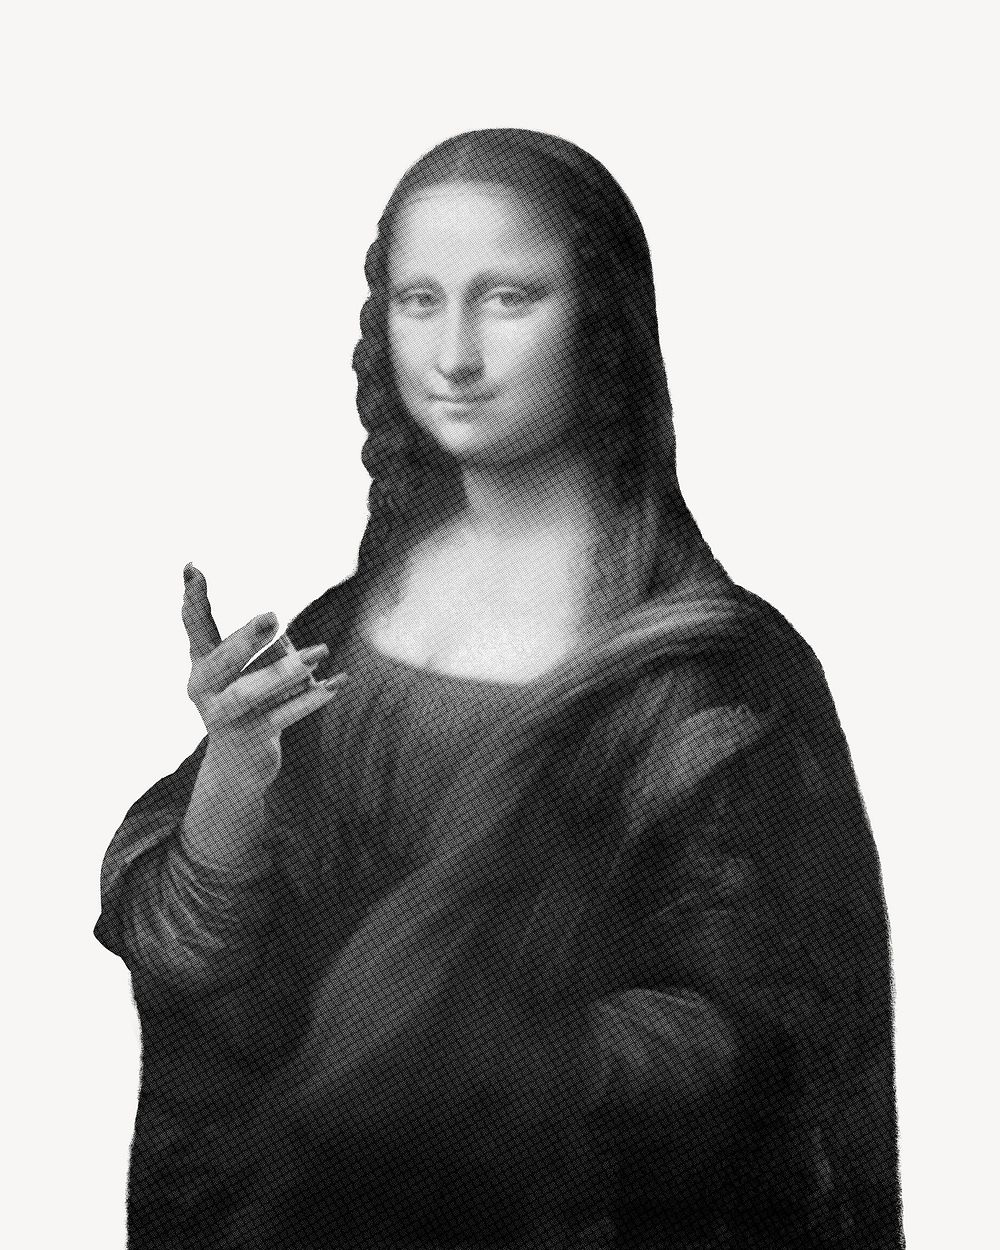 Mona Lisa in greyscale, Da Vinci's famous artwork, remixed by rawpixel psd